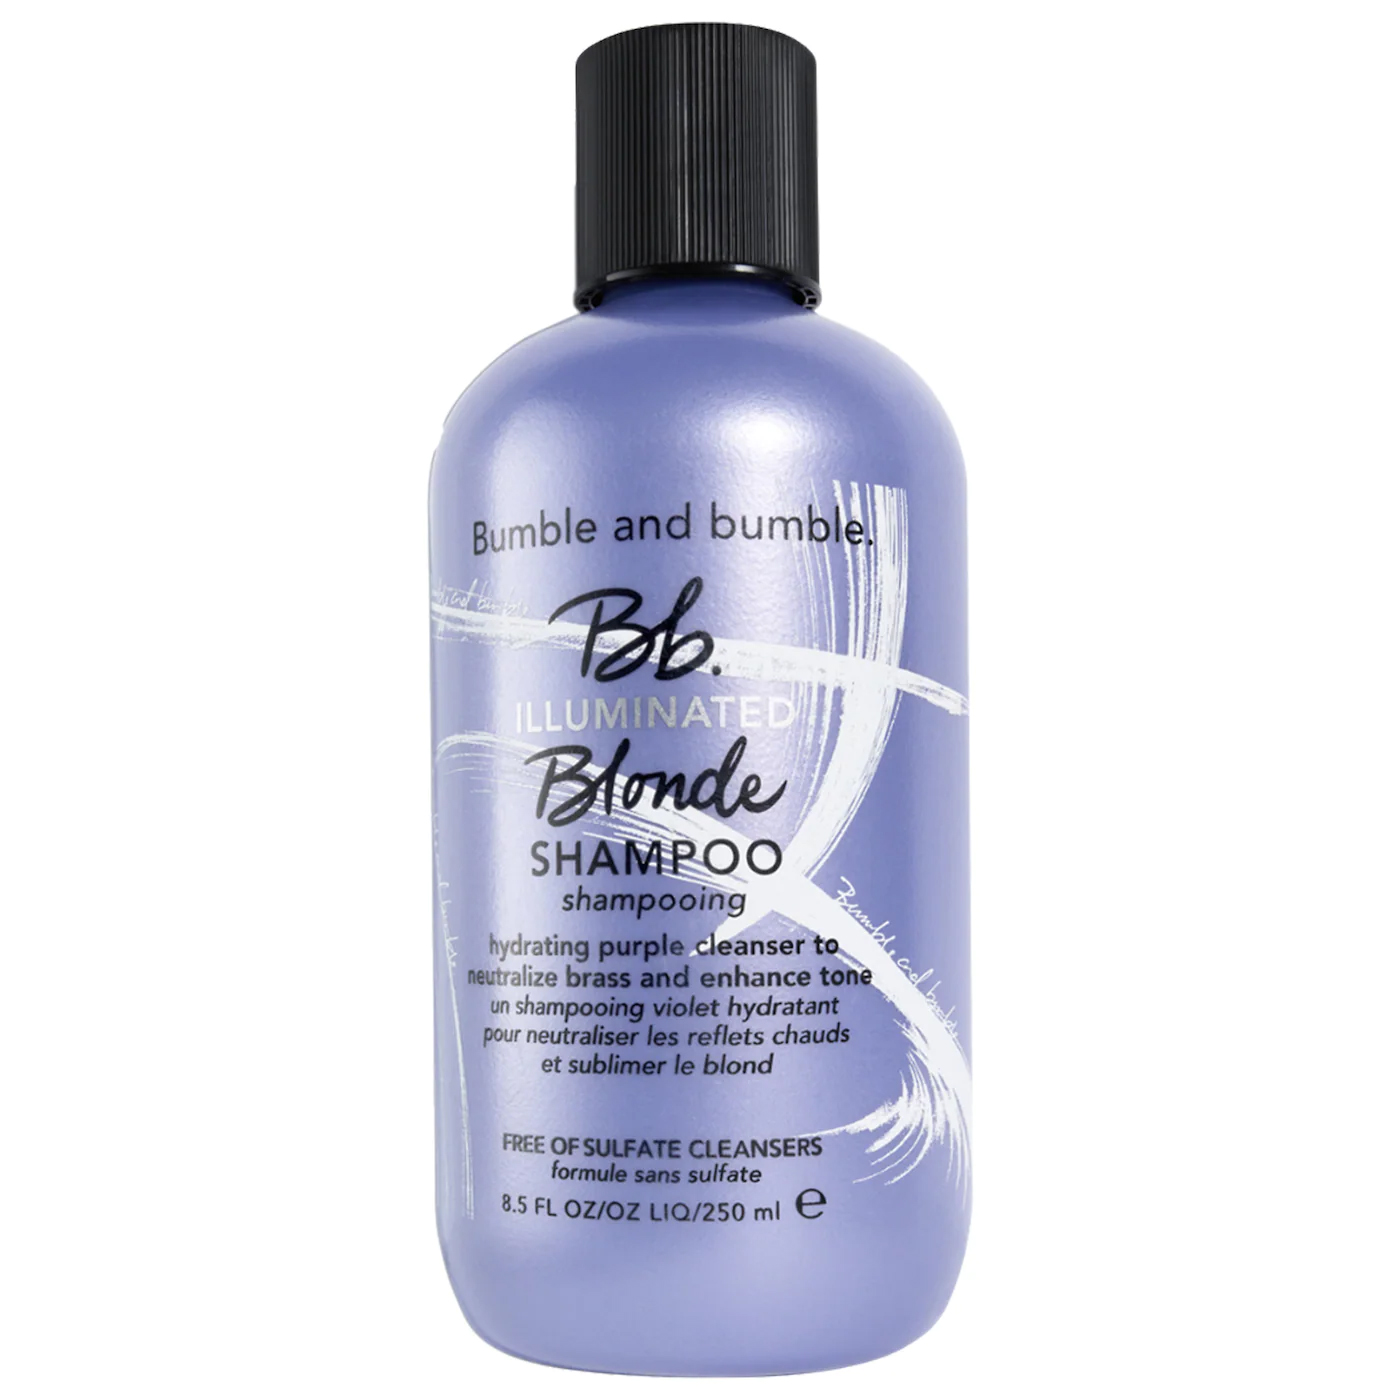 bumble and bumble shampoo